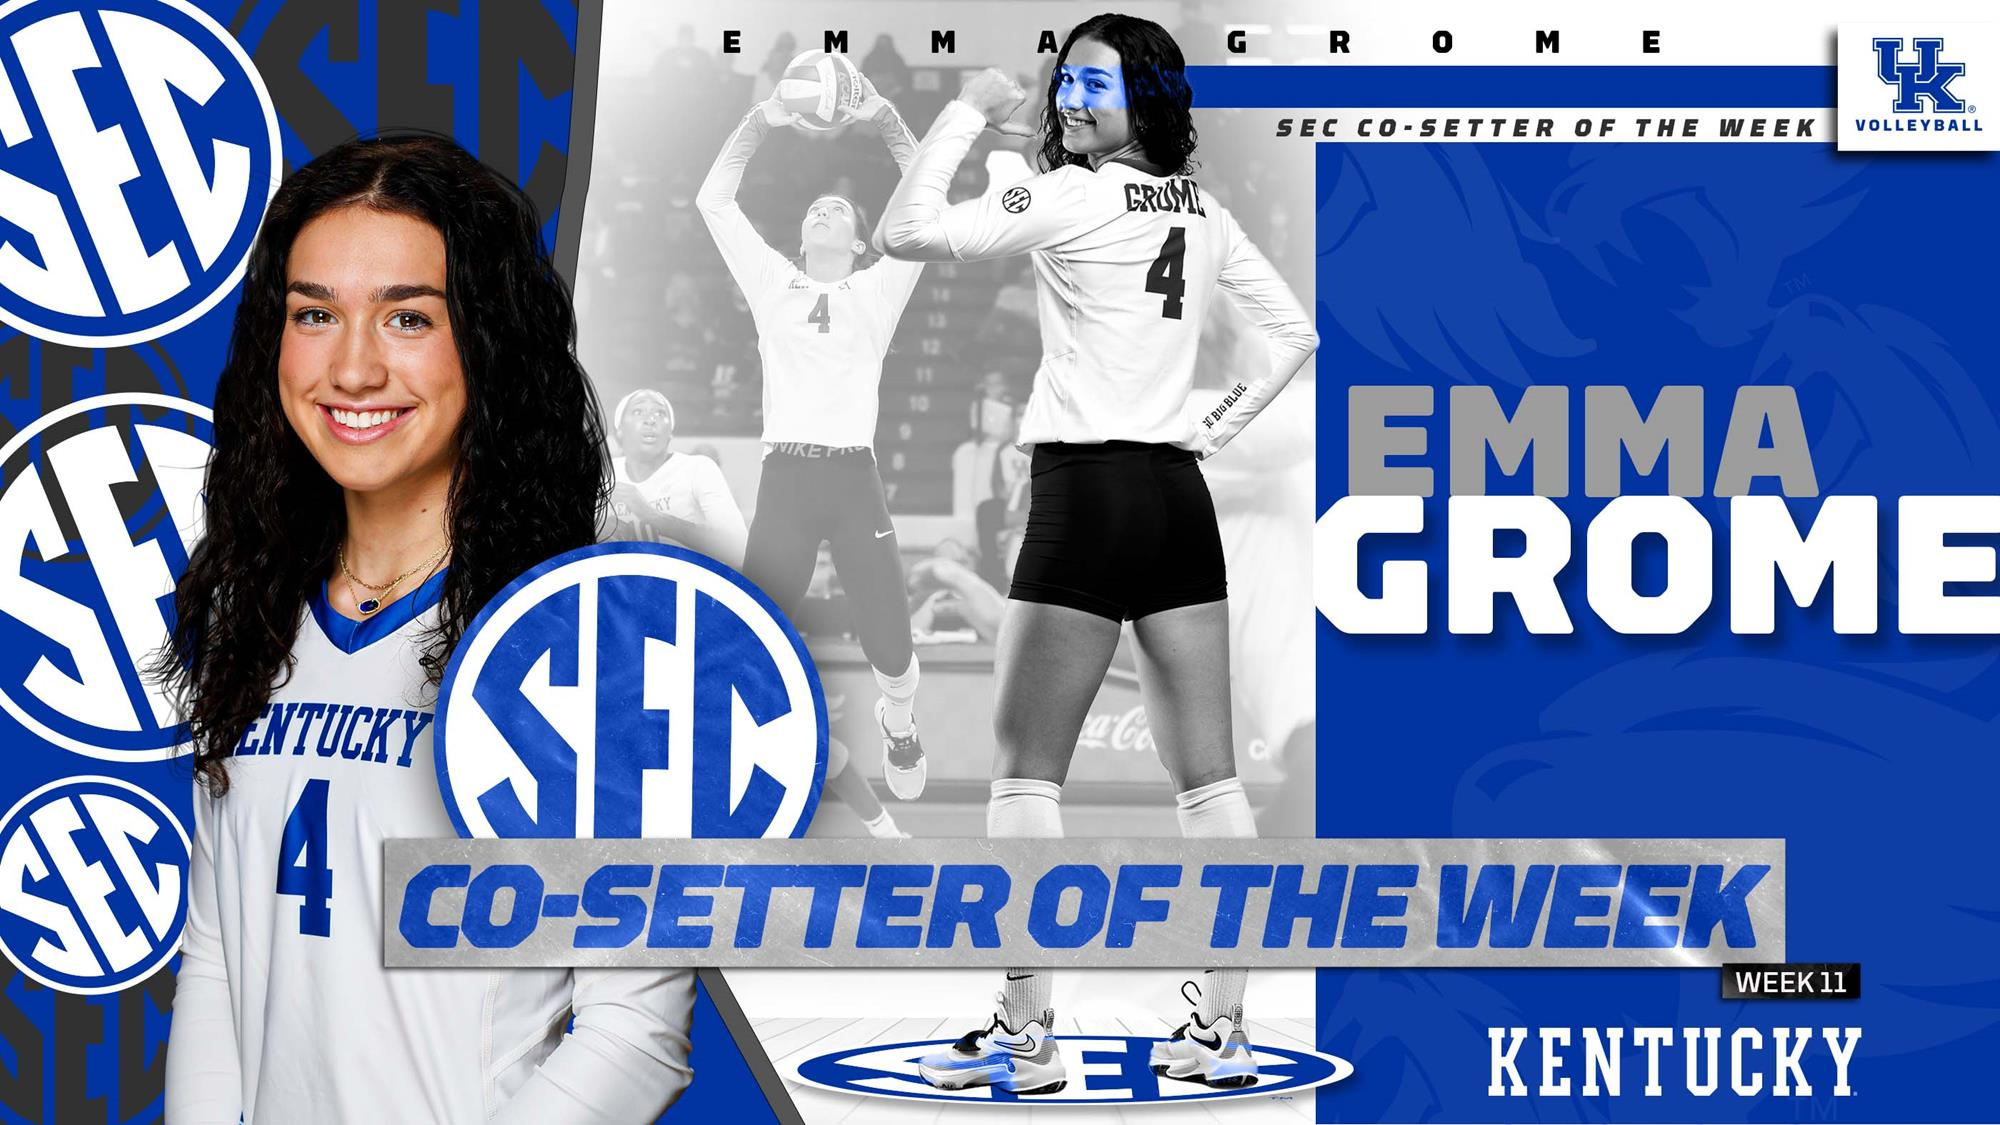 Emma Grome Named Co-SEC Setter of the Week